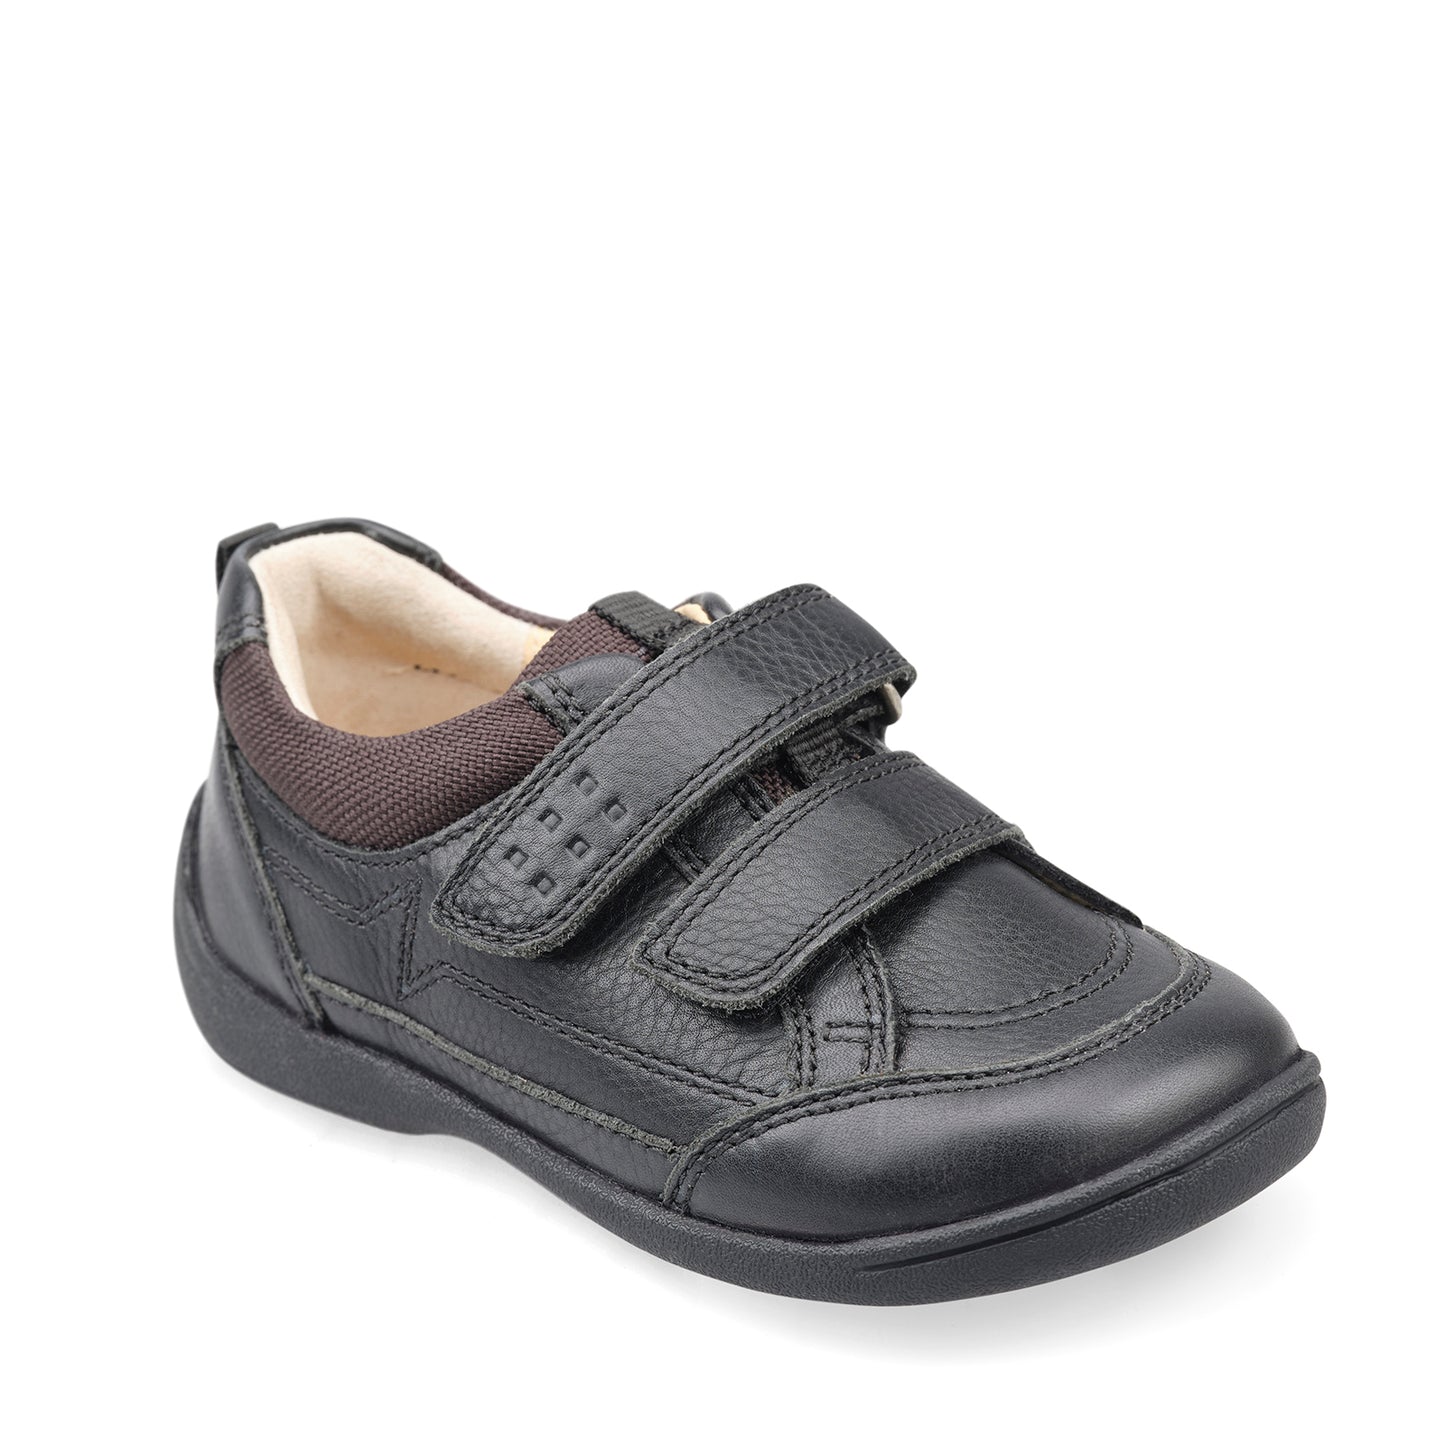 Zigzag Soft Black Leather Boy's First School Shoe